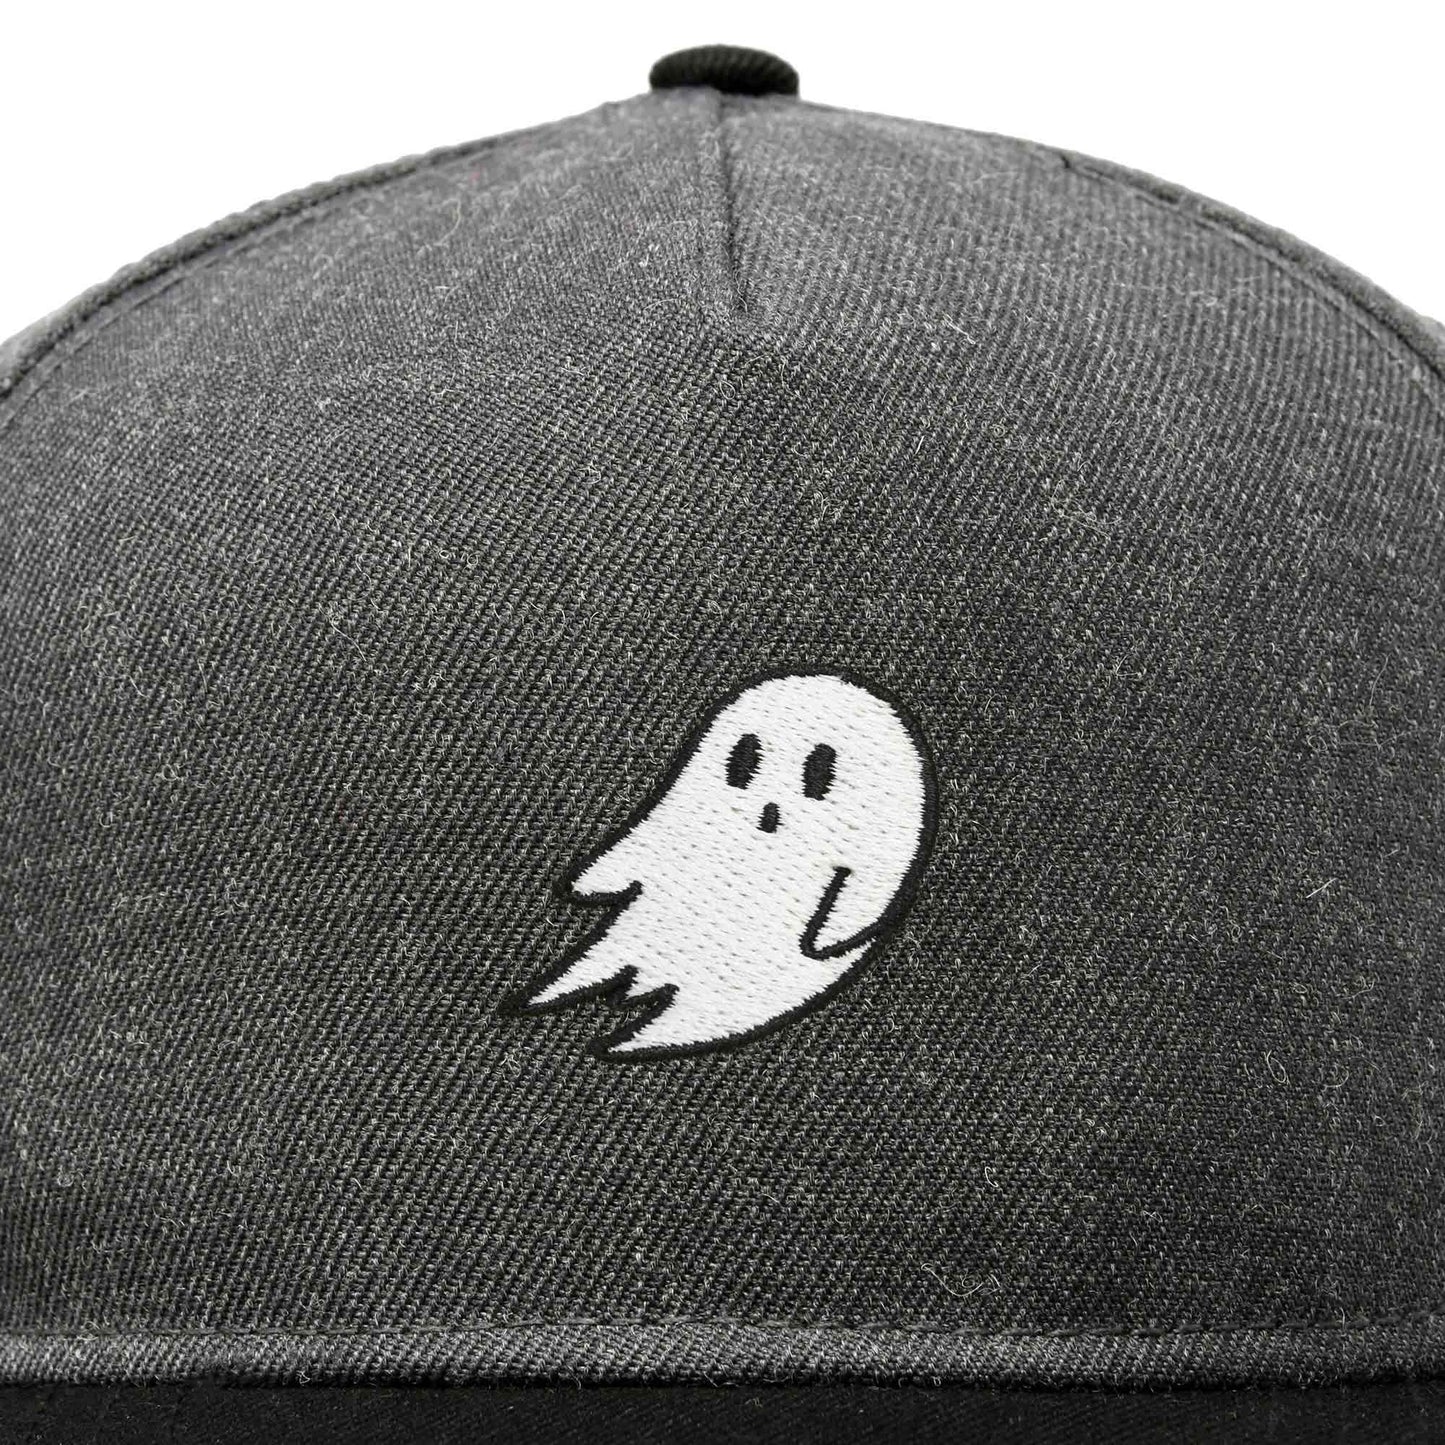 Dalix Snapback Ghost Cap